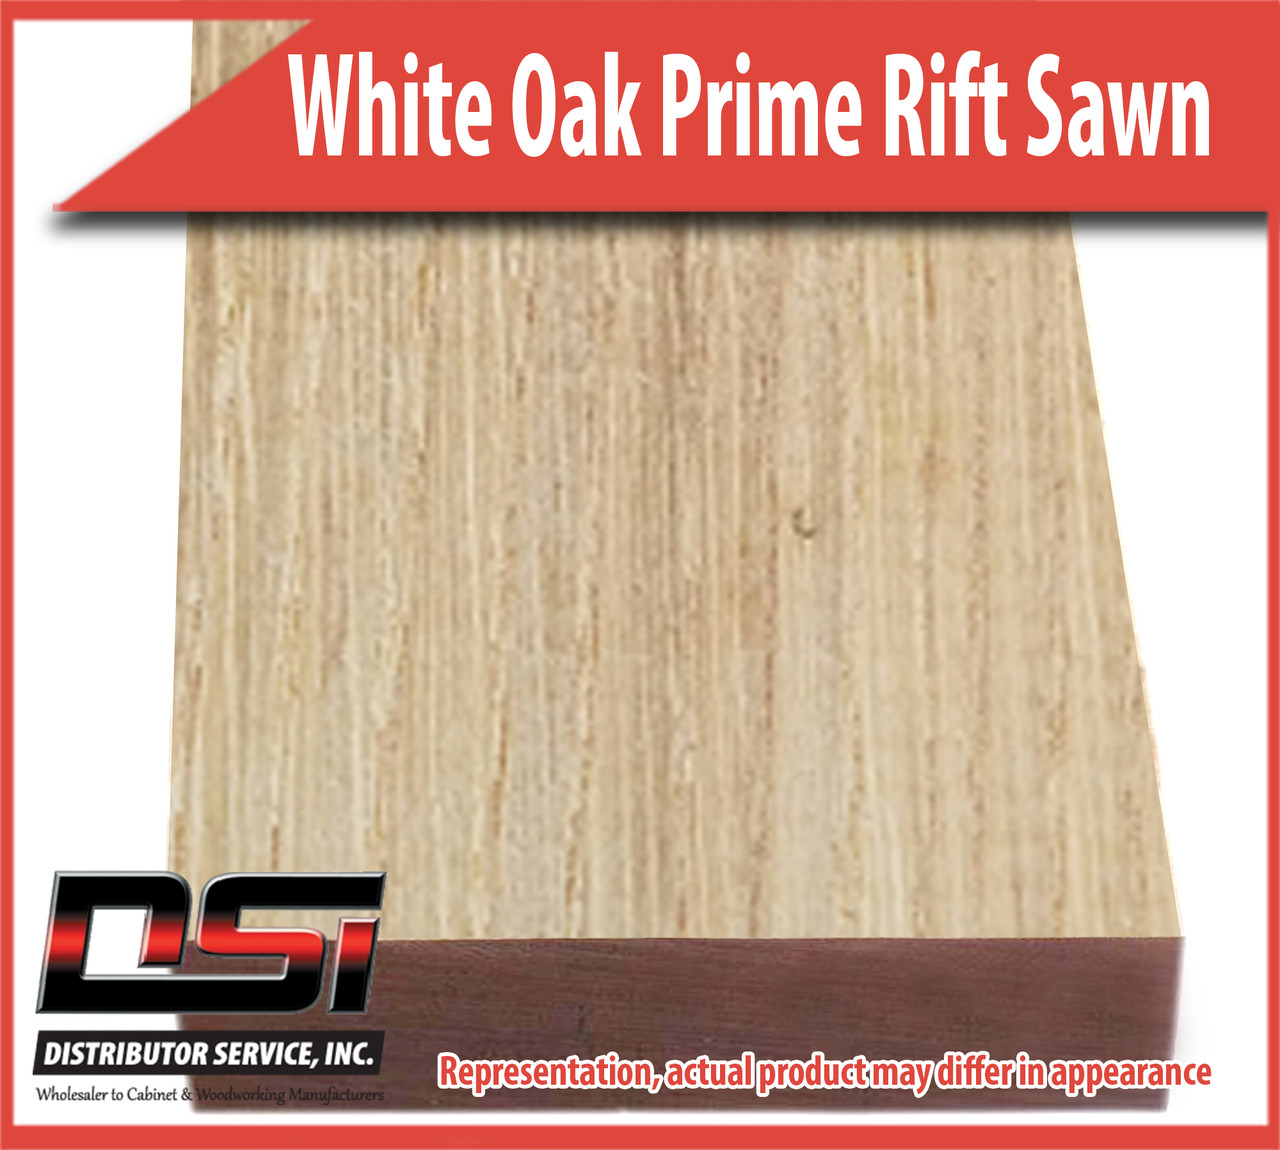 Domestic Hardwood Lumber White Oak Prime Rift Sawn 15/16" 8'